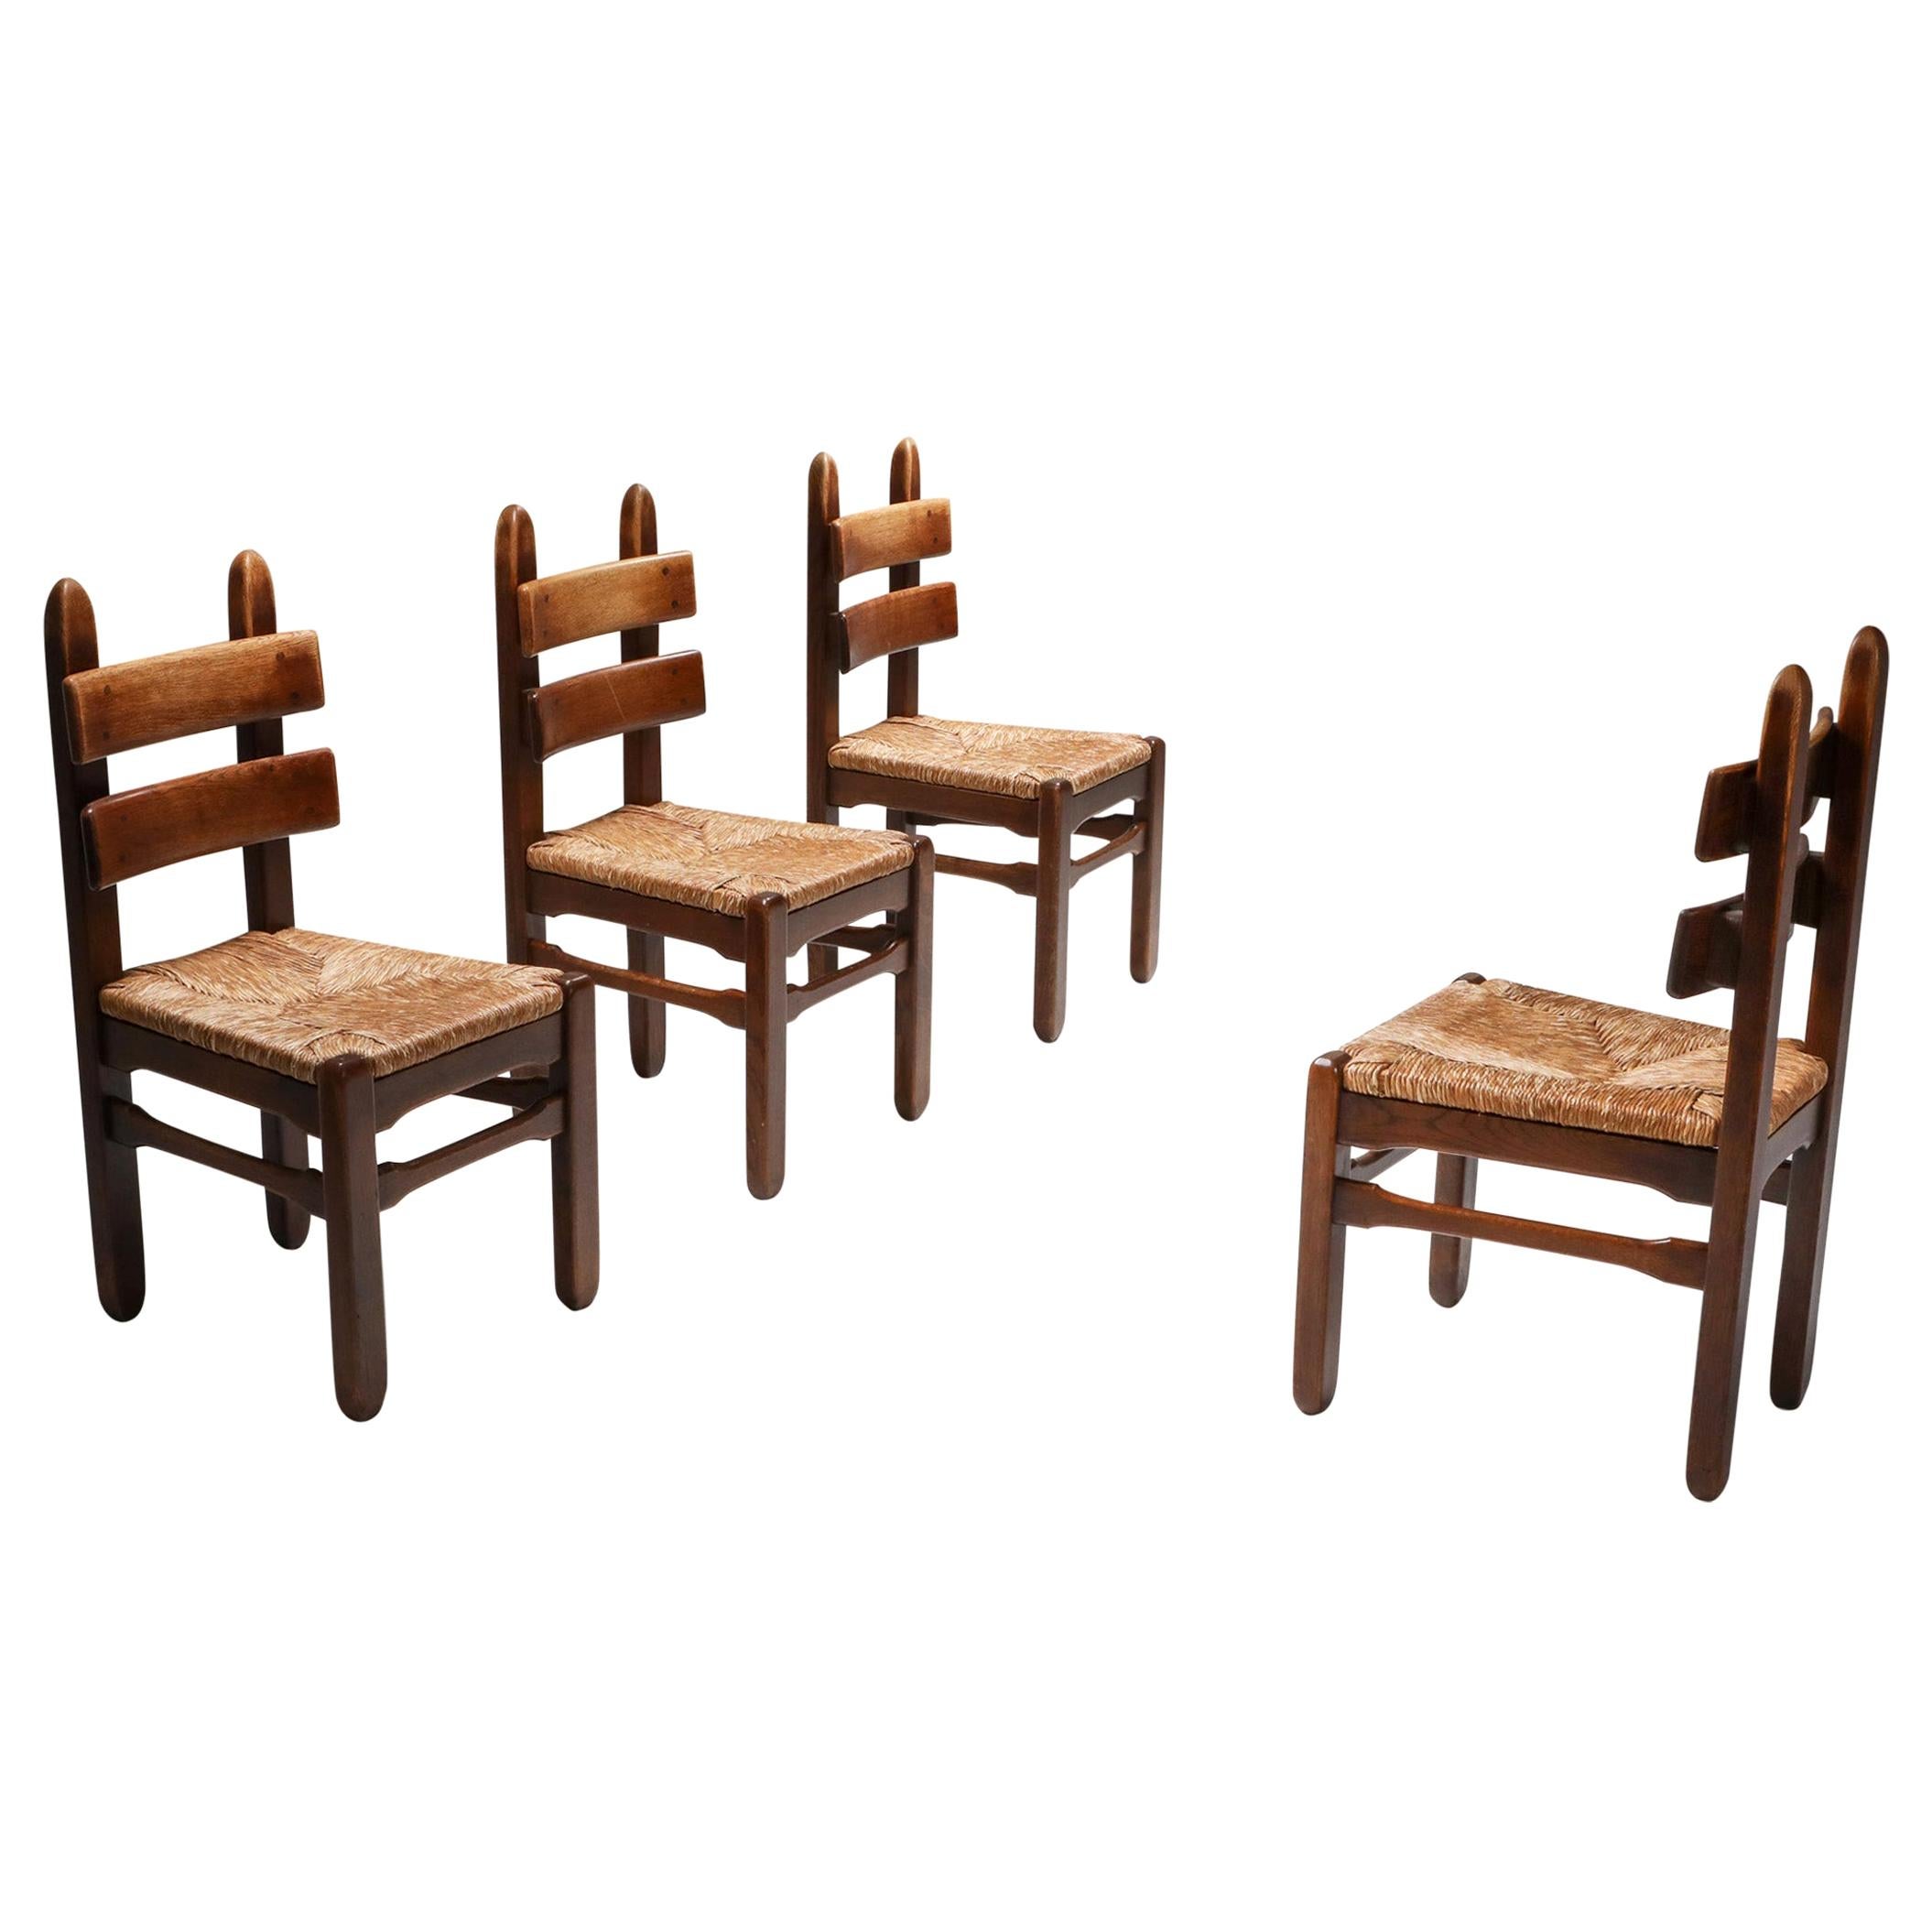 Rustic Modern Oak and Cord Chairs